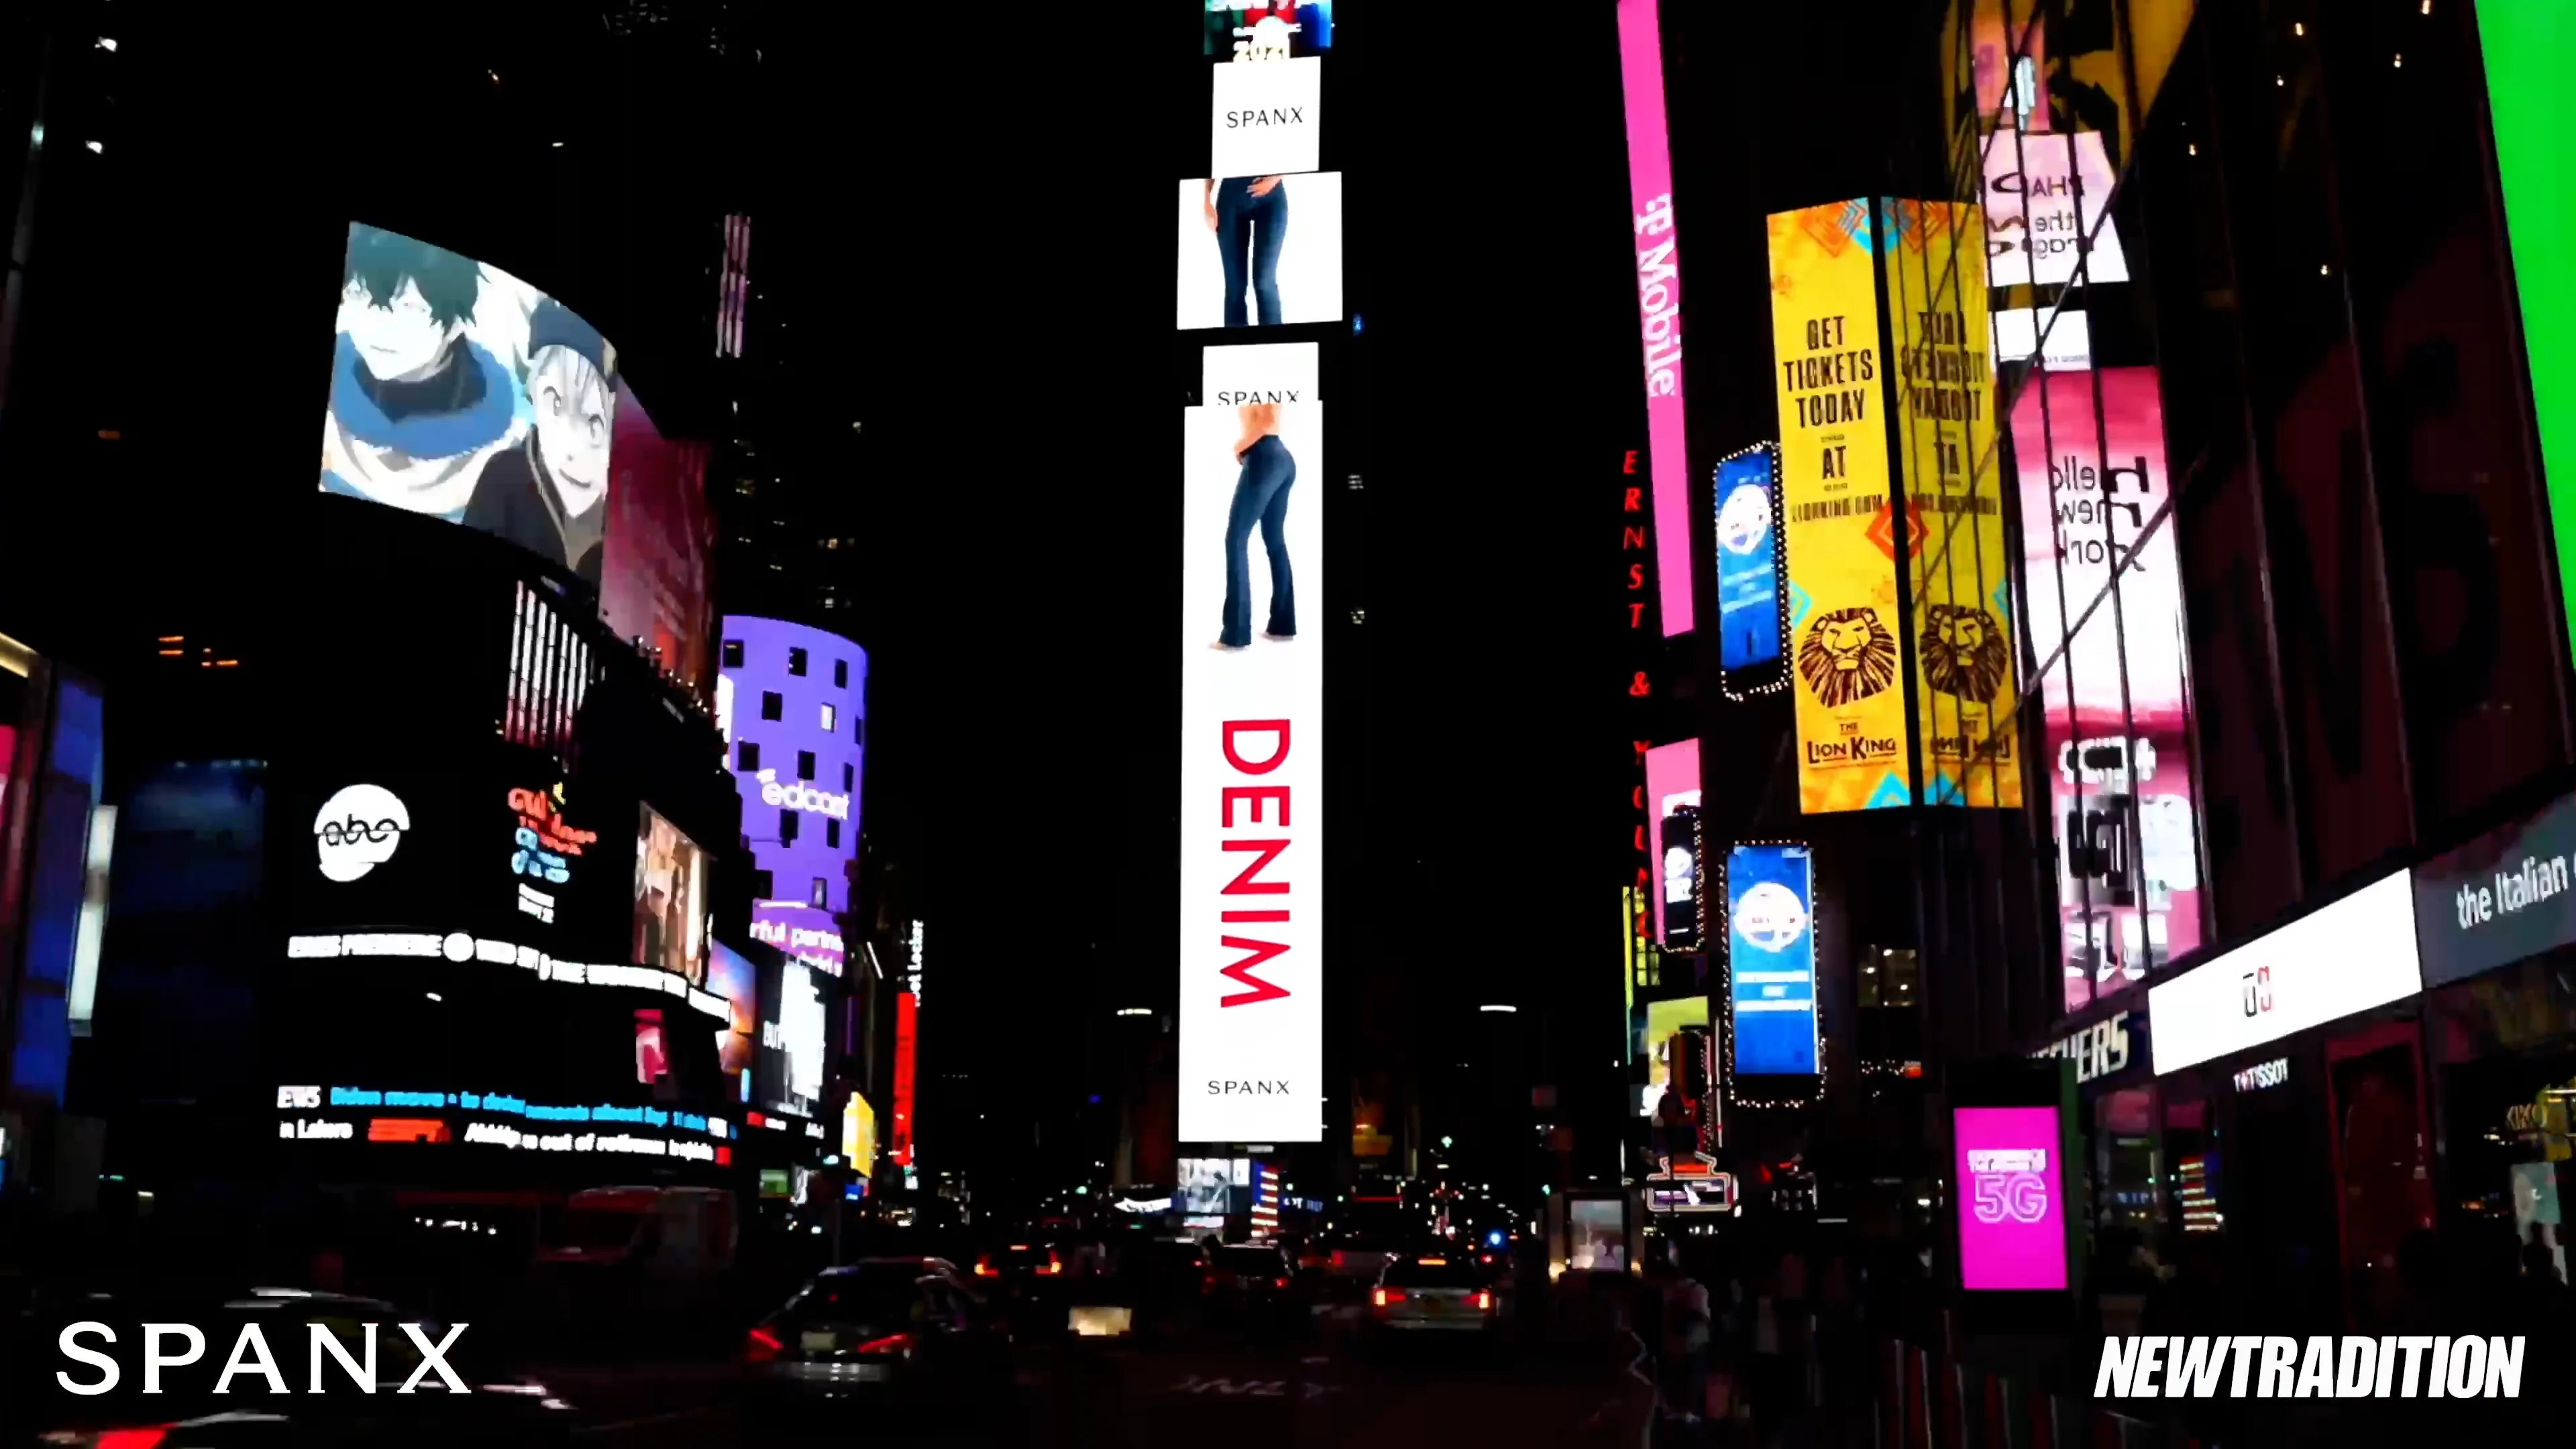 Spanx @ 1 Times Square on Vimeo